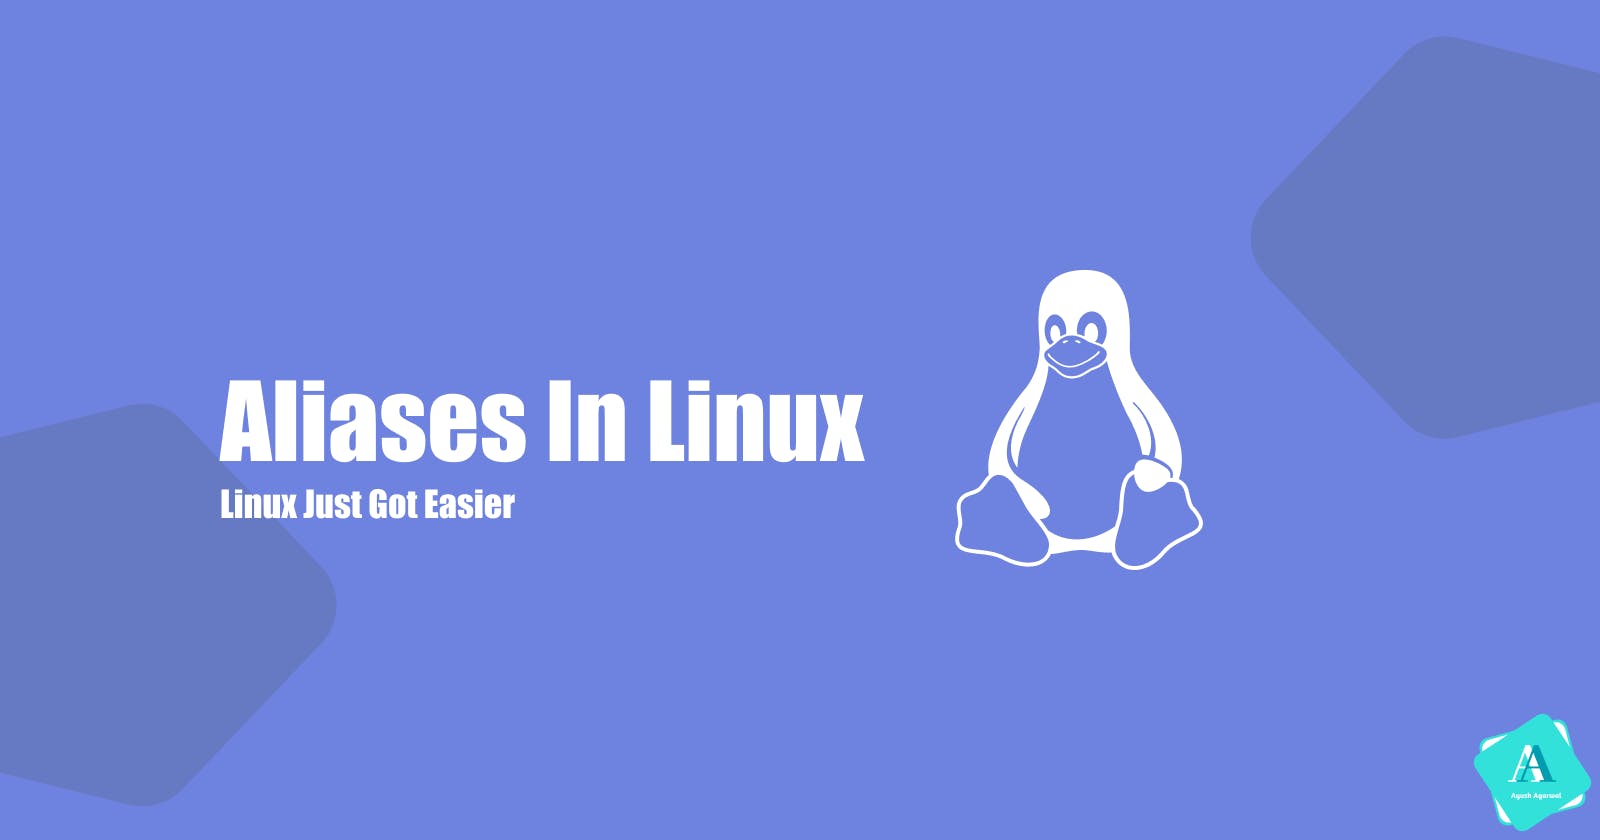 Aliases - Using Linux Just Got Easier